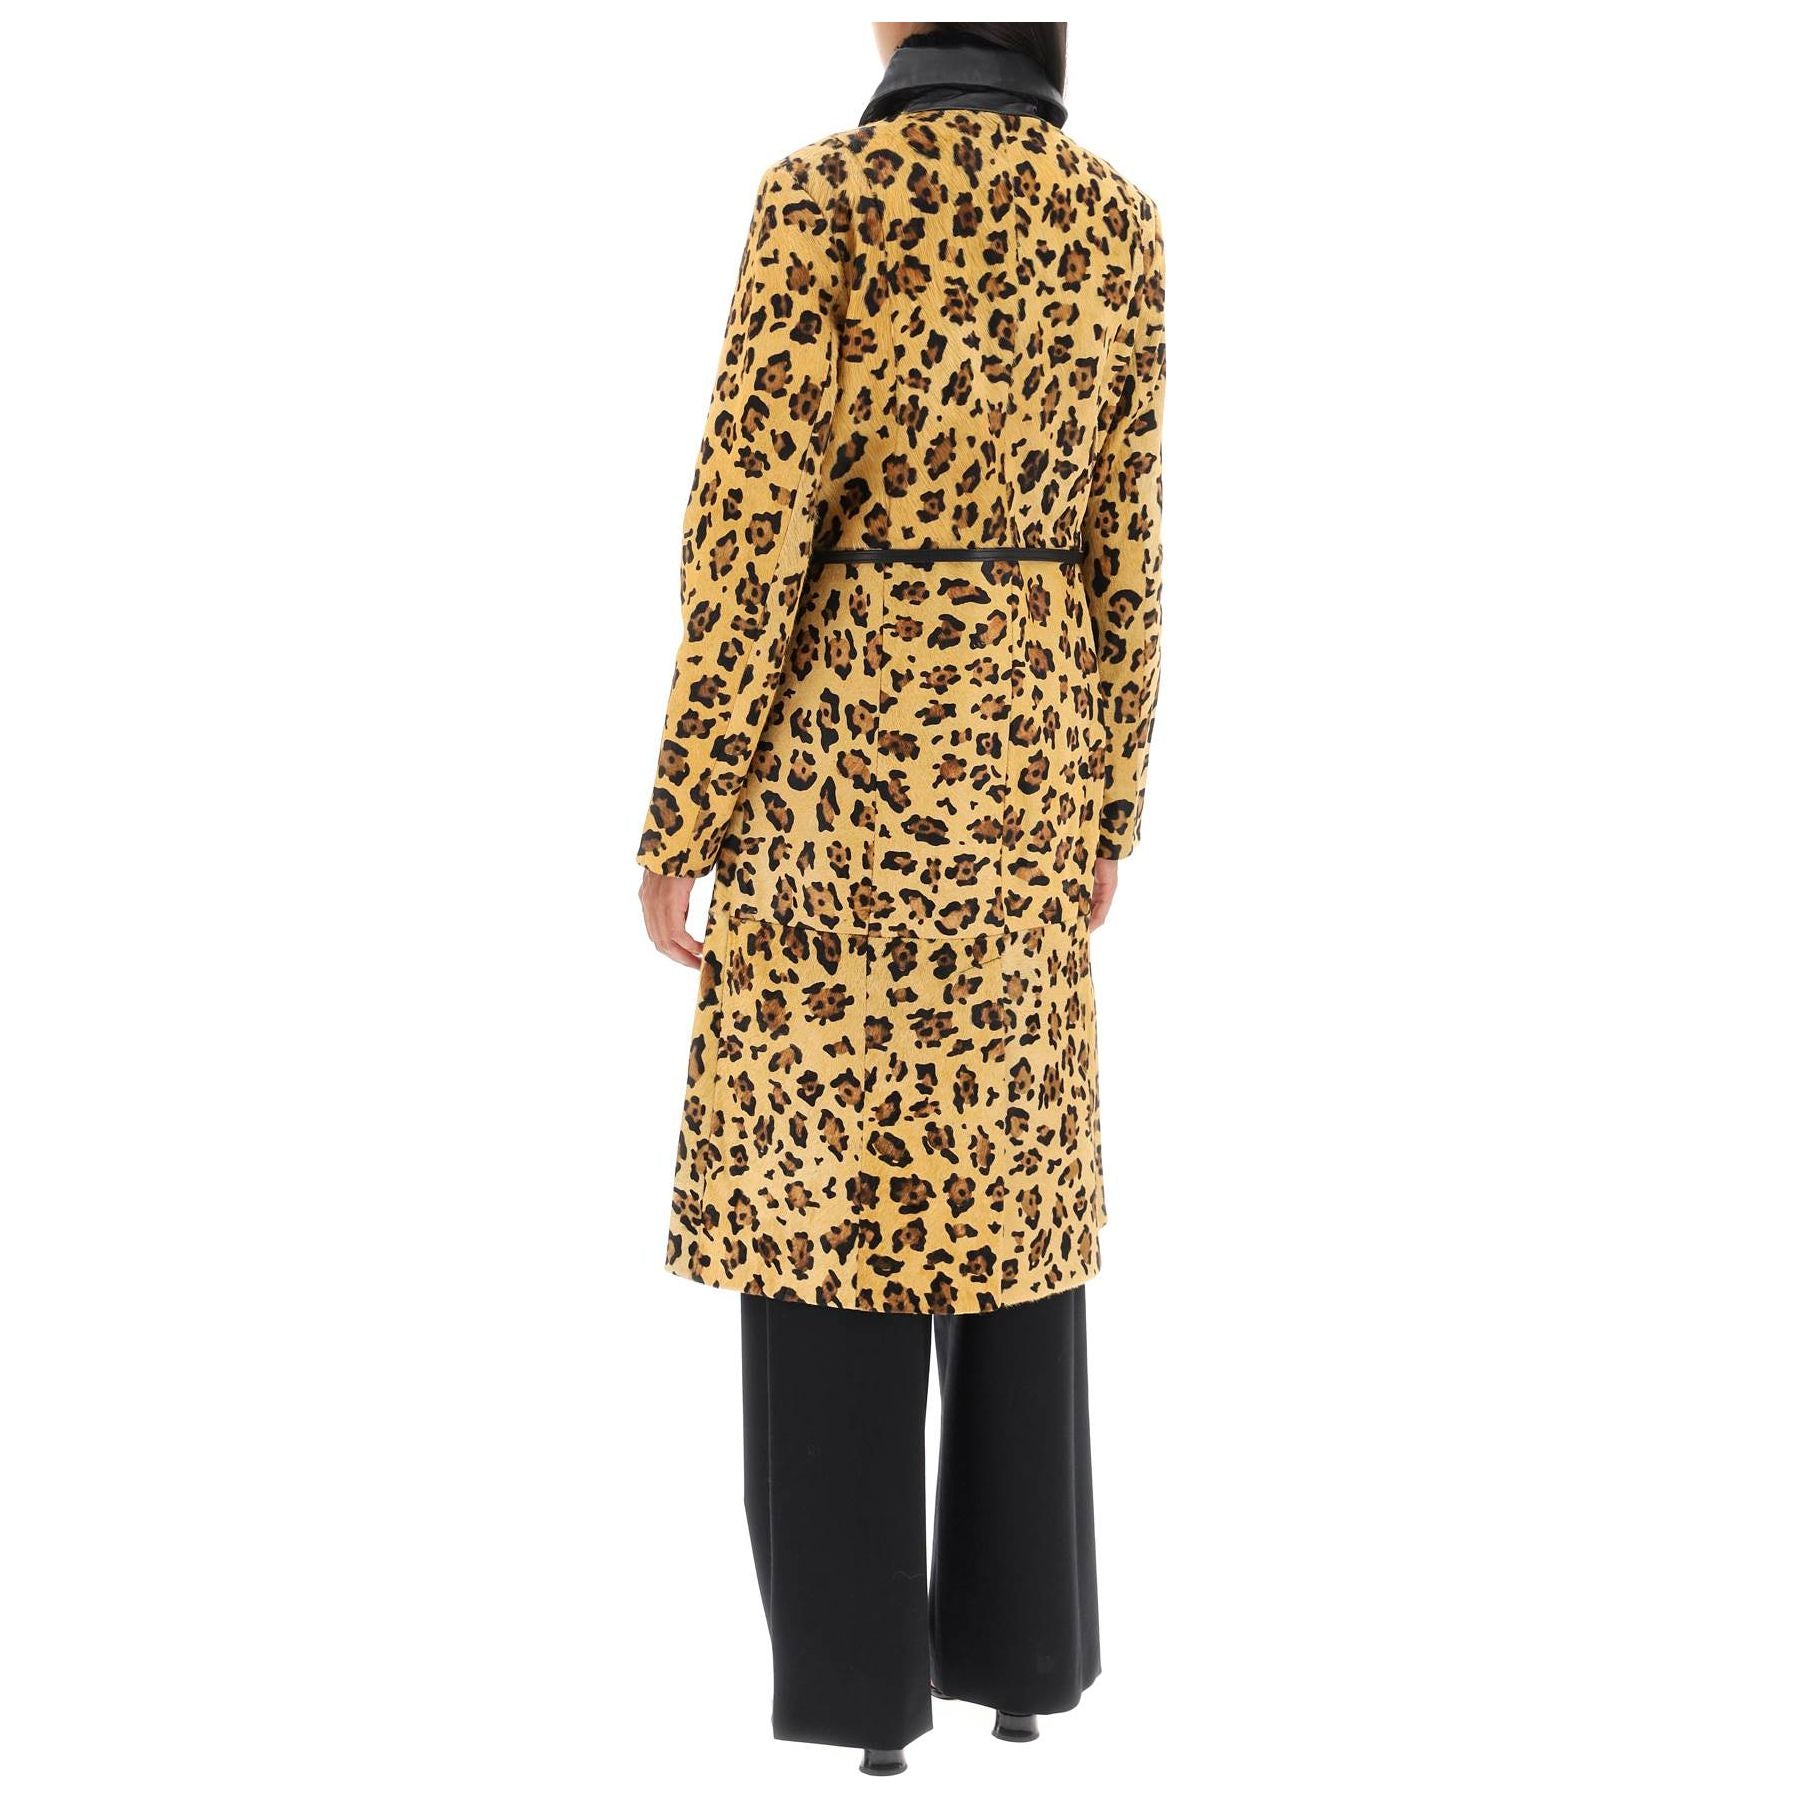 'Ginger' Leopard Motif Ponyskin Coat